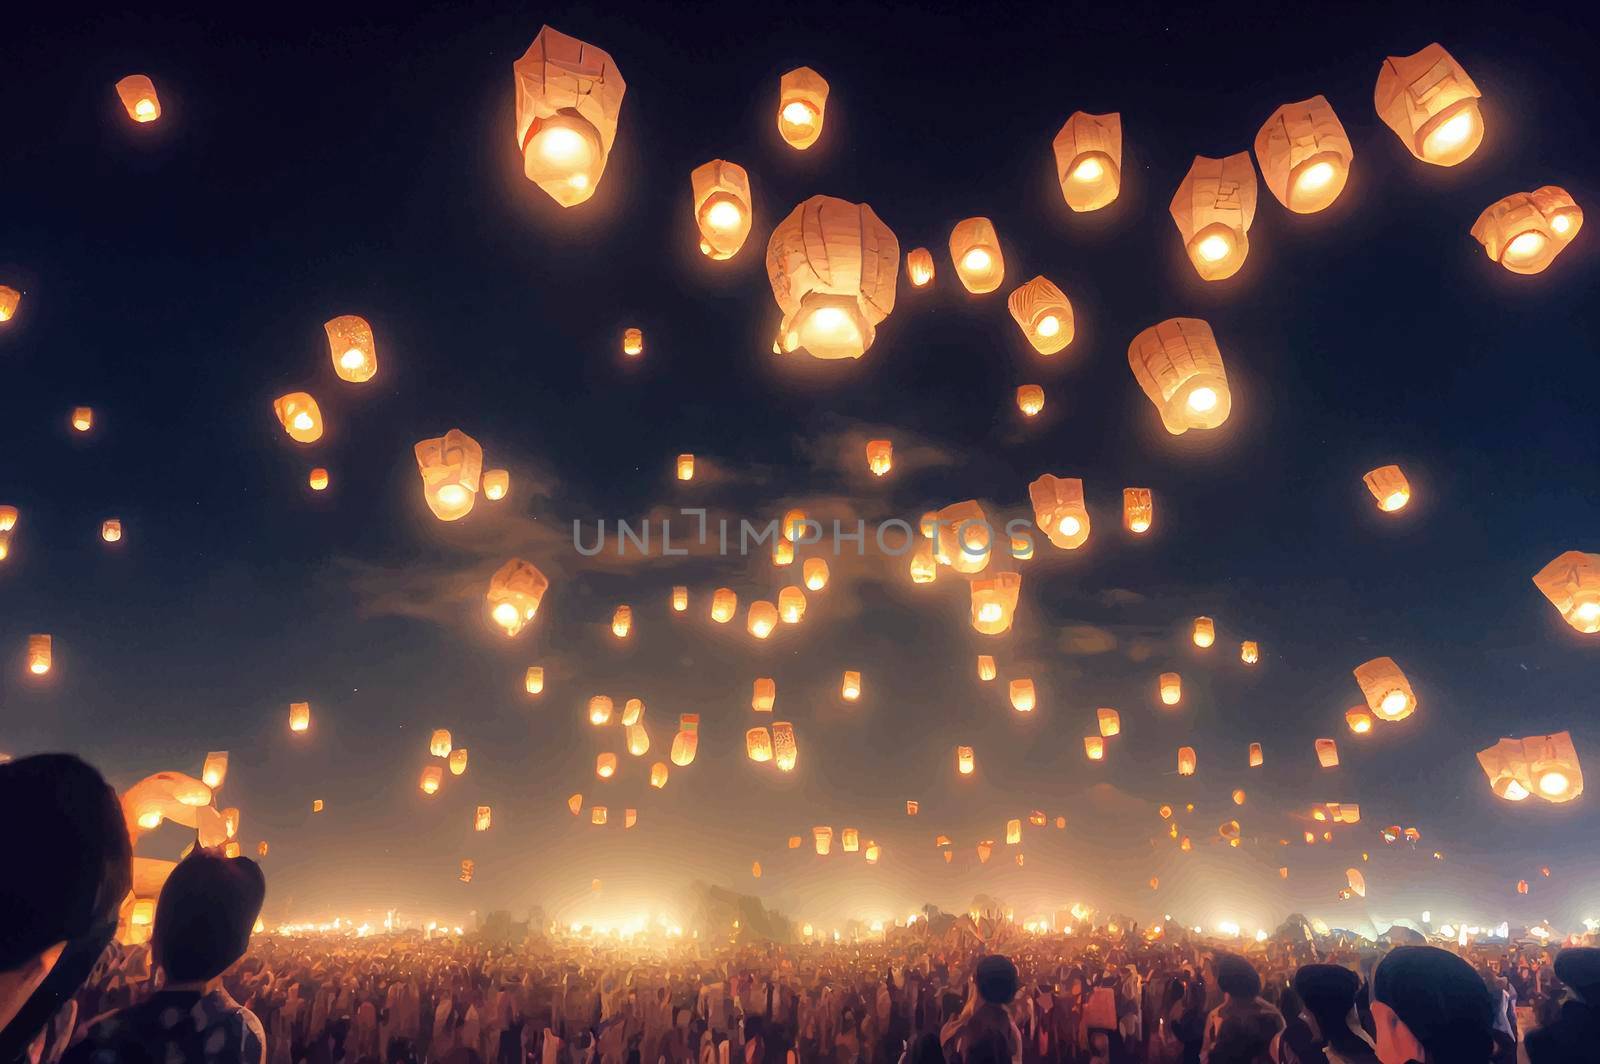 CHIANG MAI LANTERN FESTIVAL, flashlights in the air. cantoya balloons